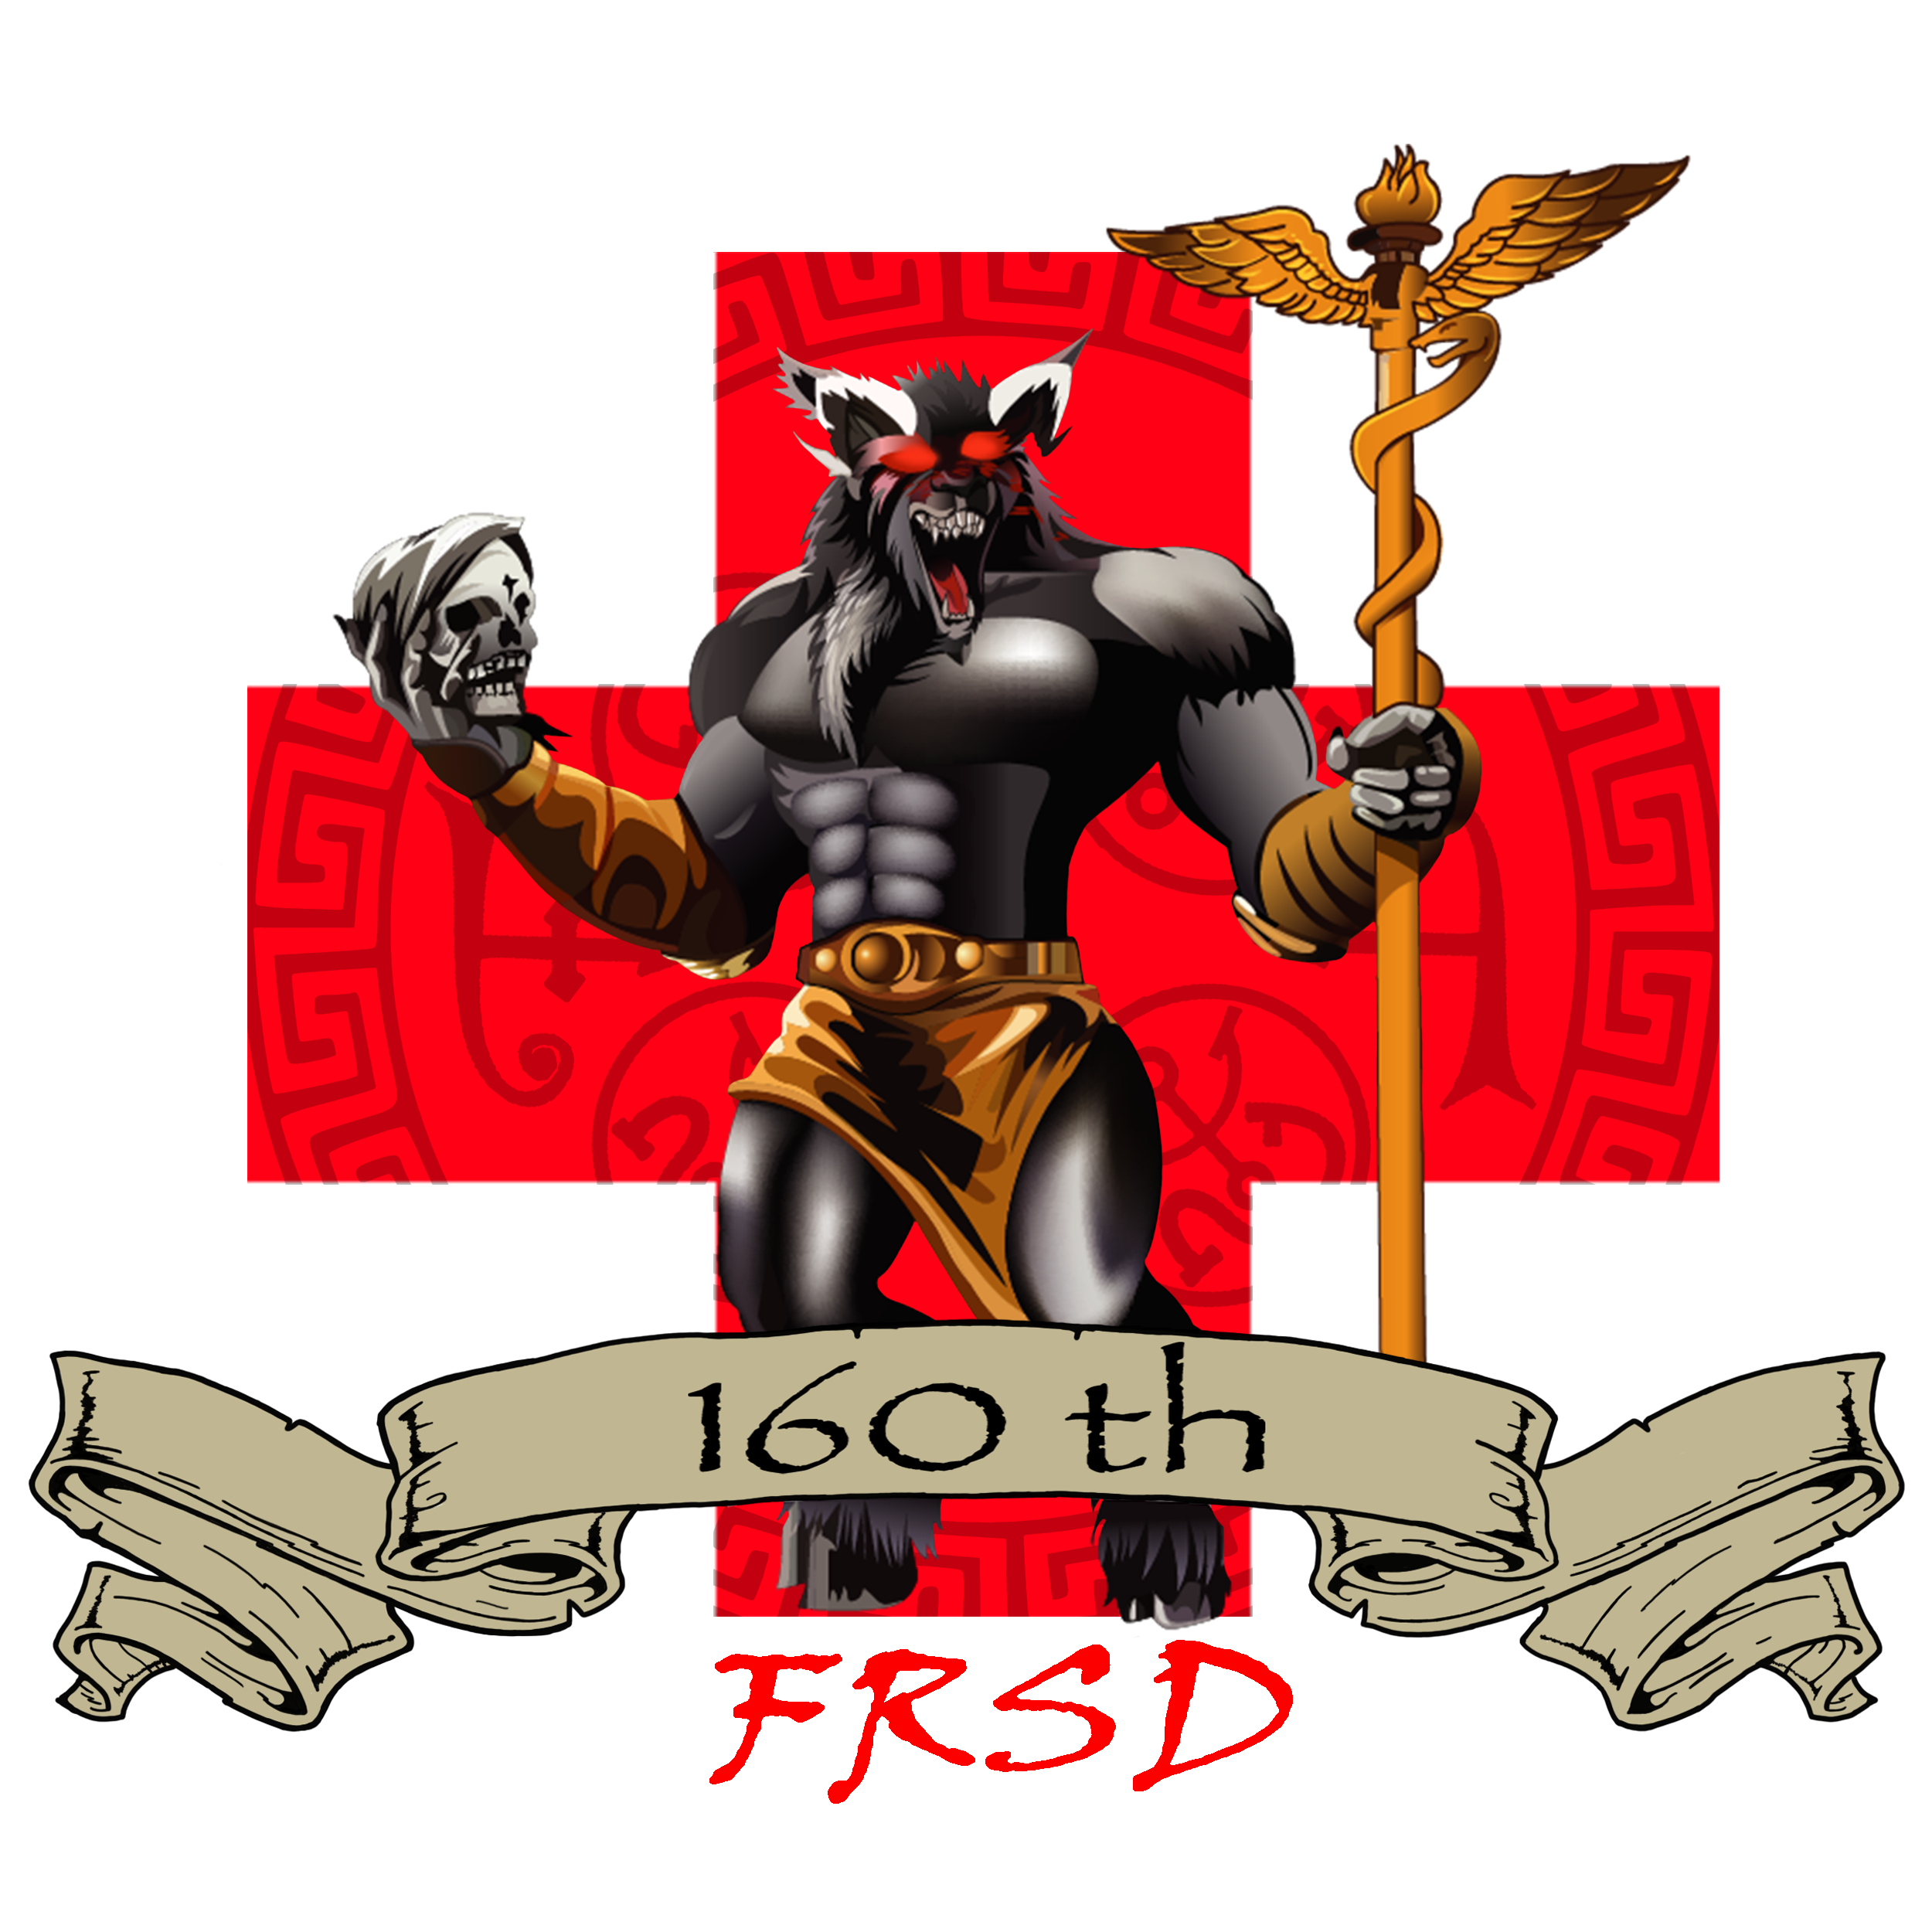 160th FRSD